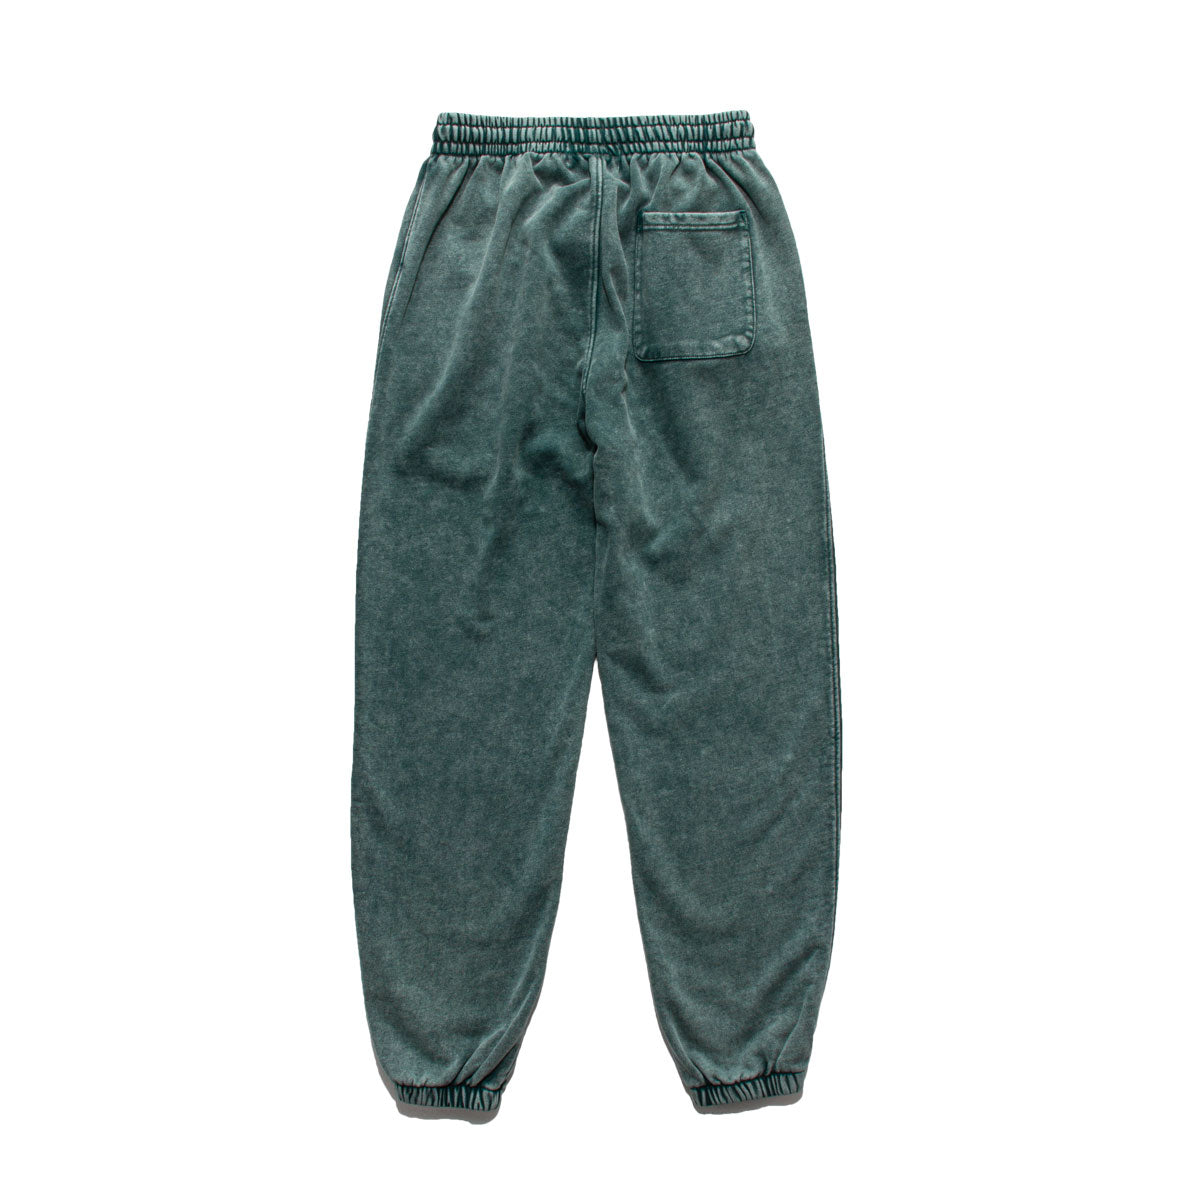 Vintage Sweat Pants - Green